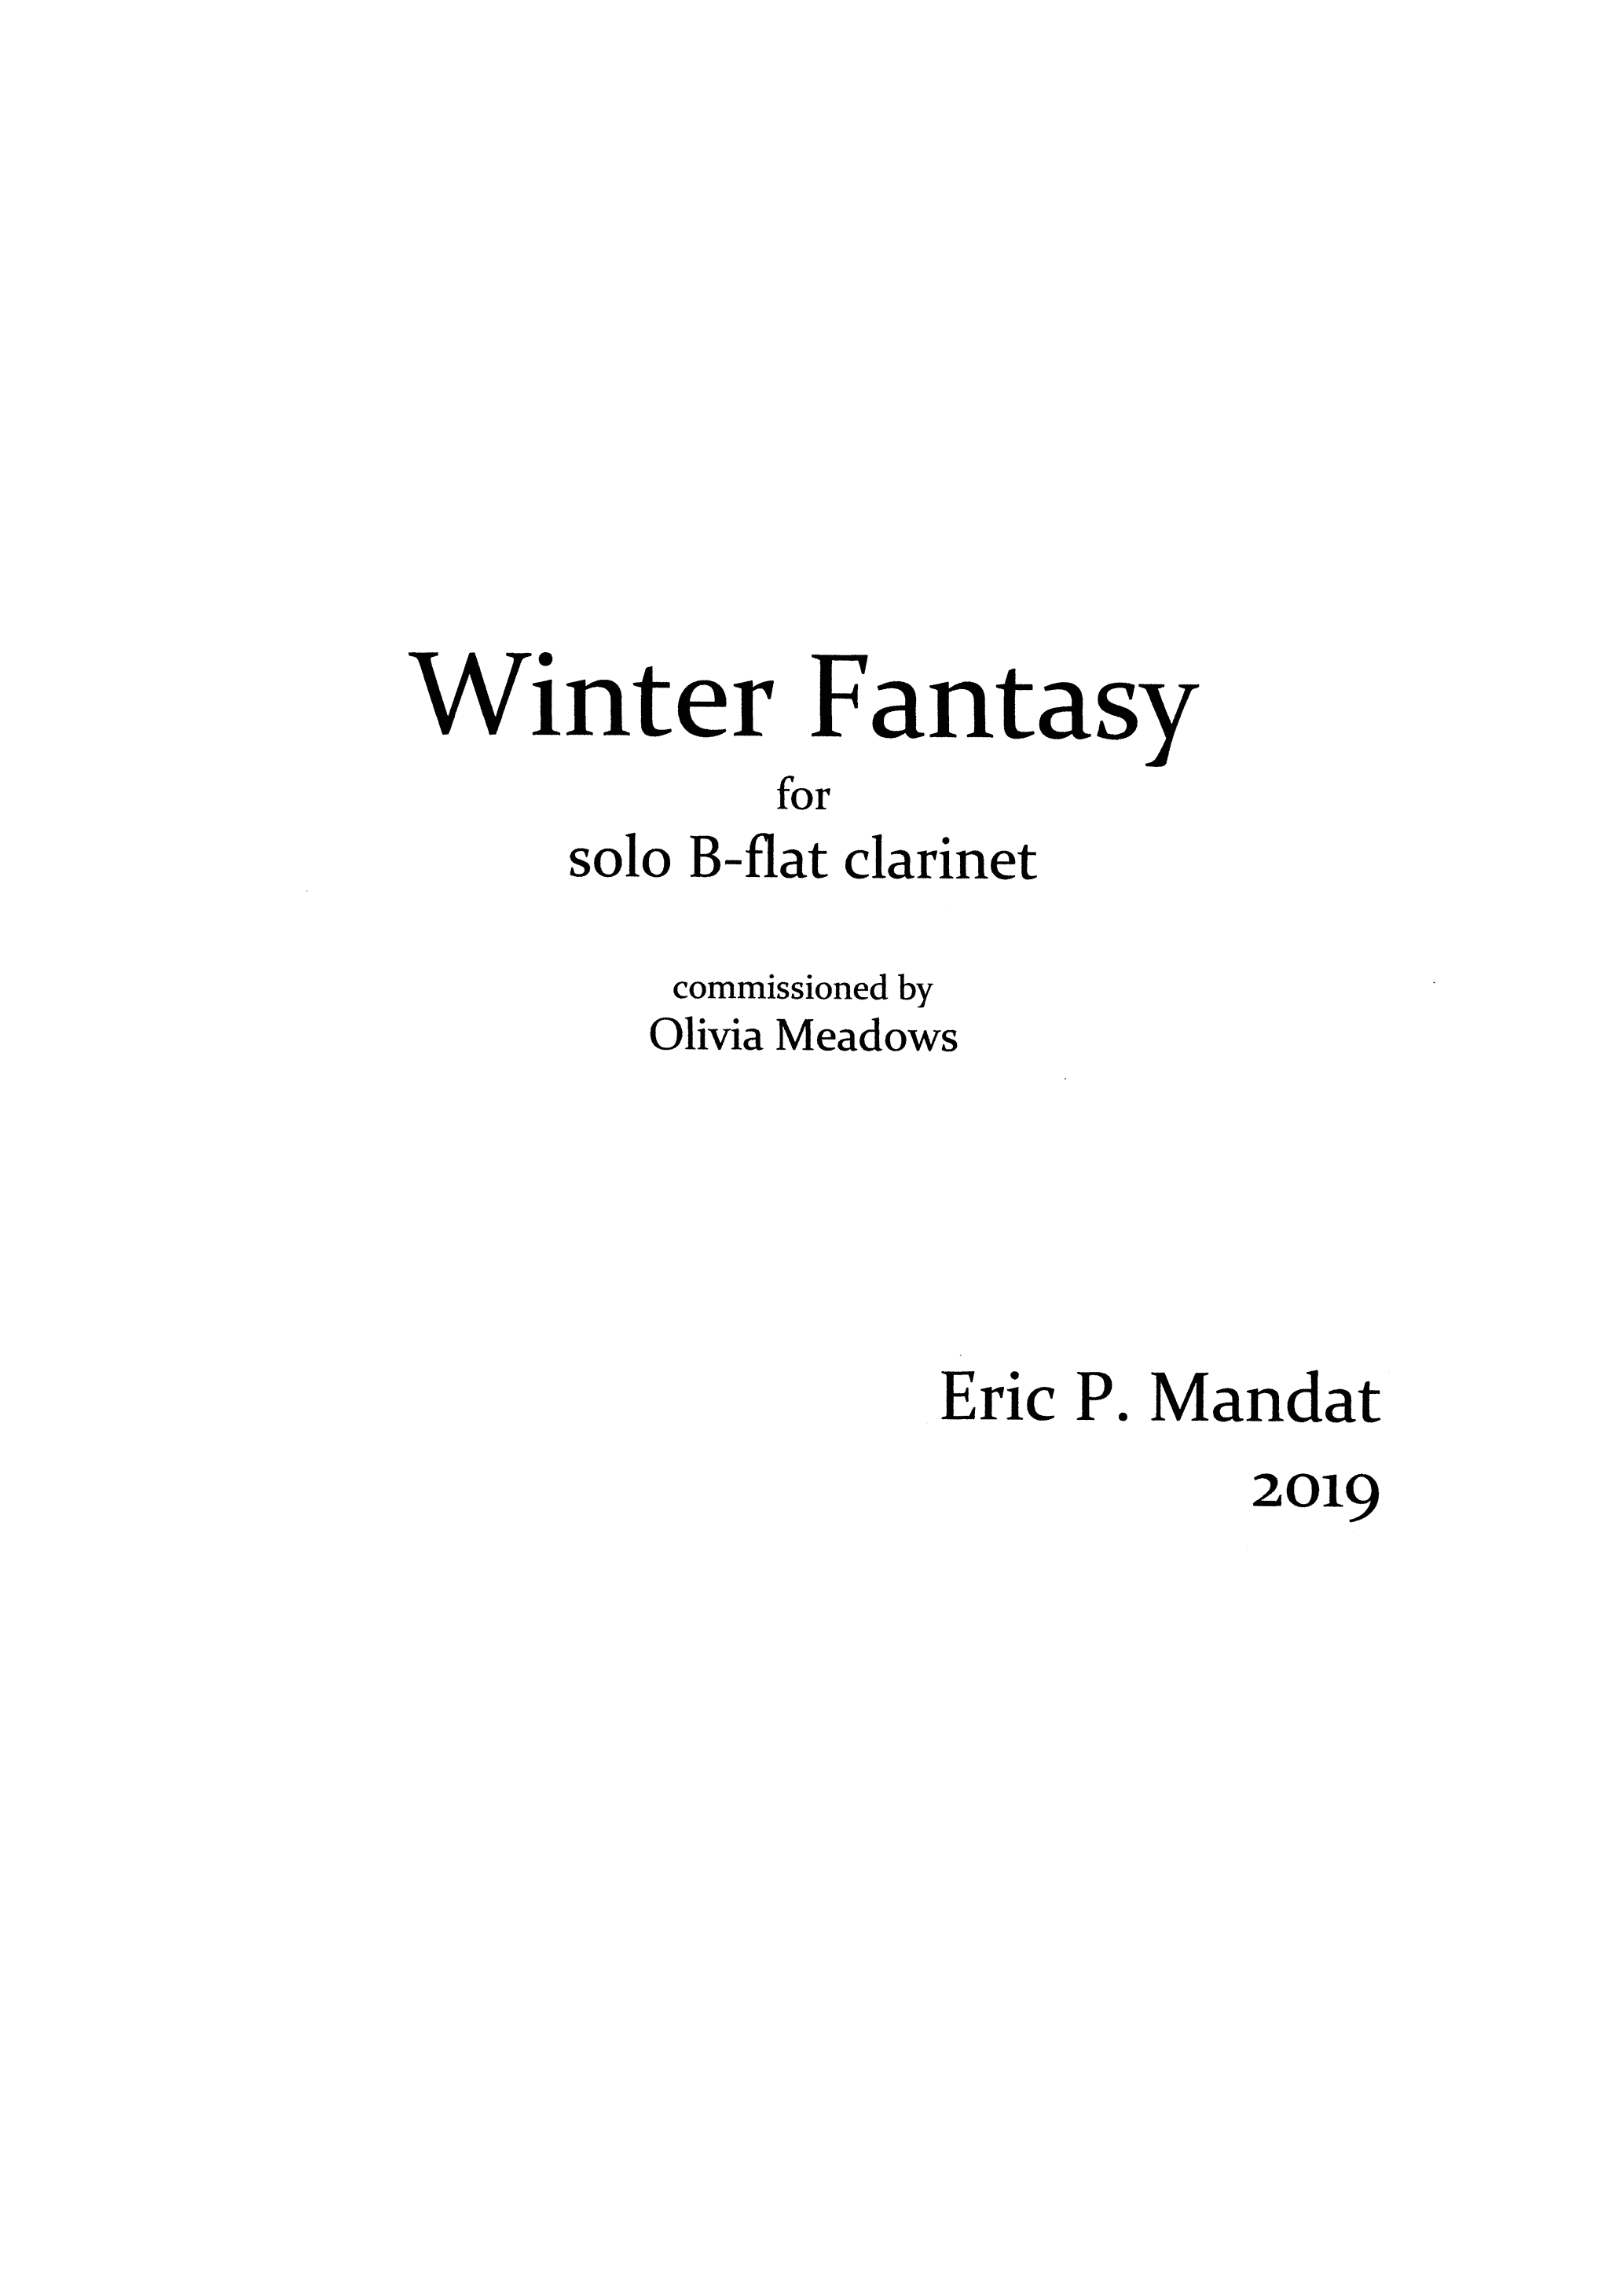 Mandat Winter Fantasy Cover